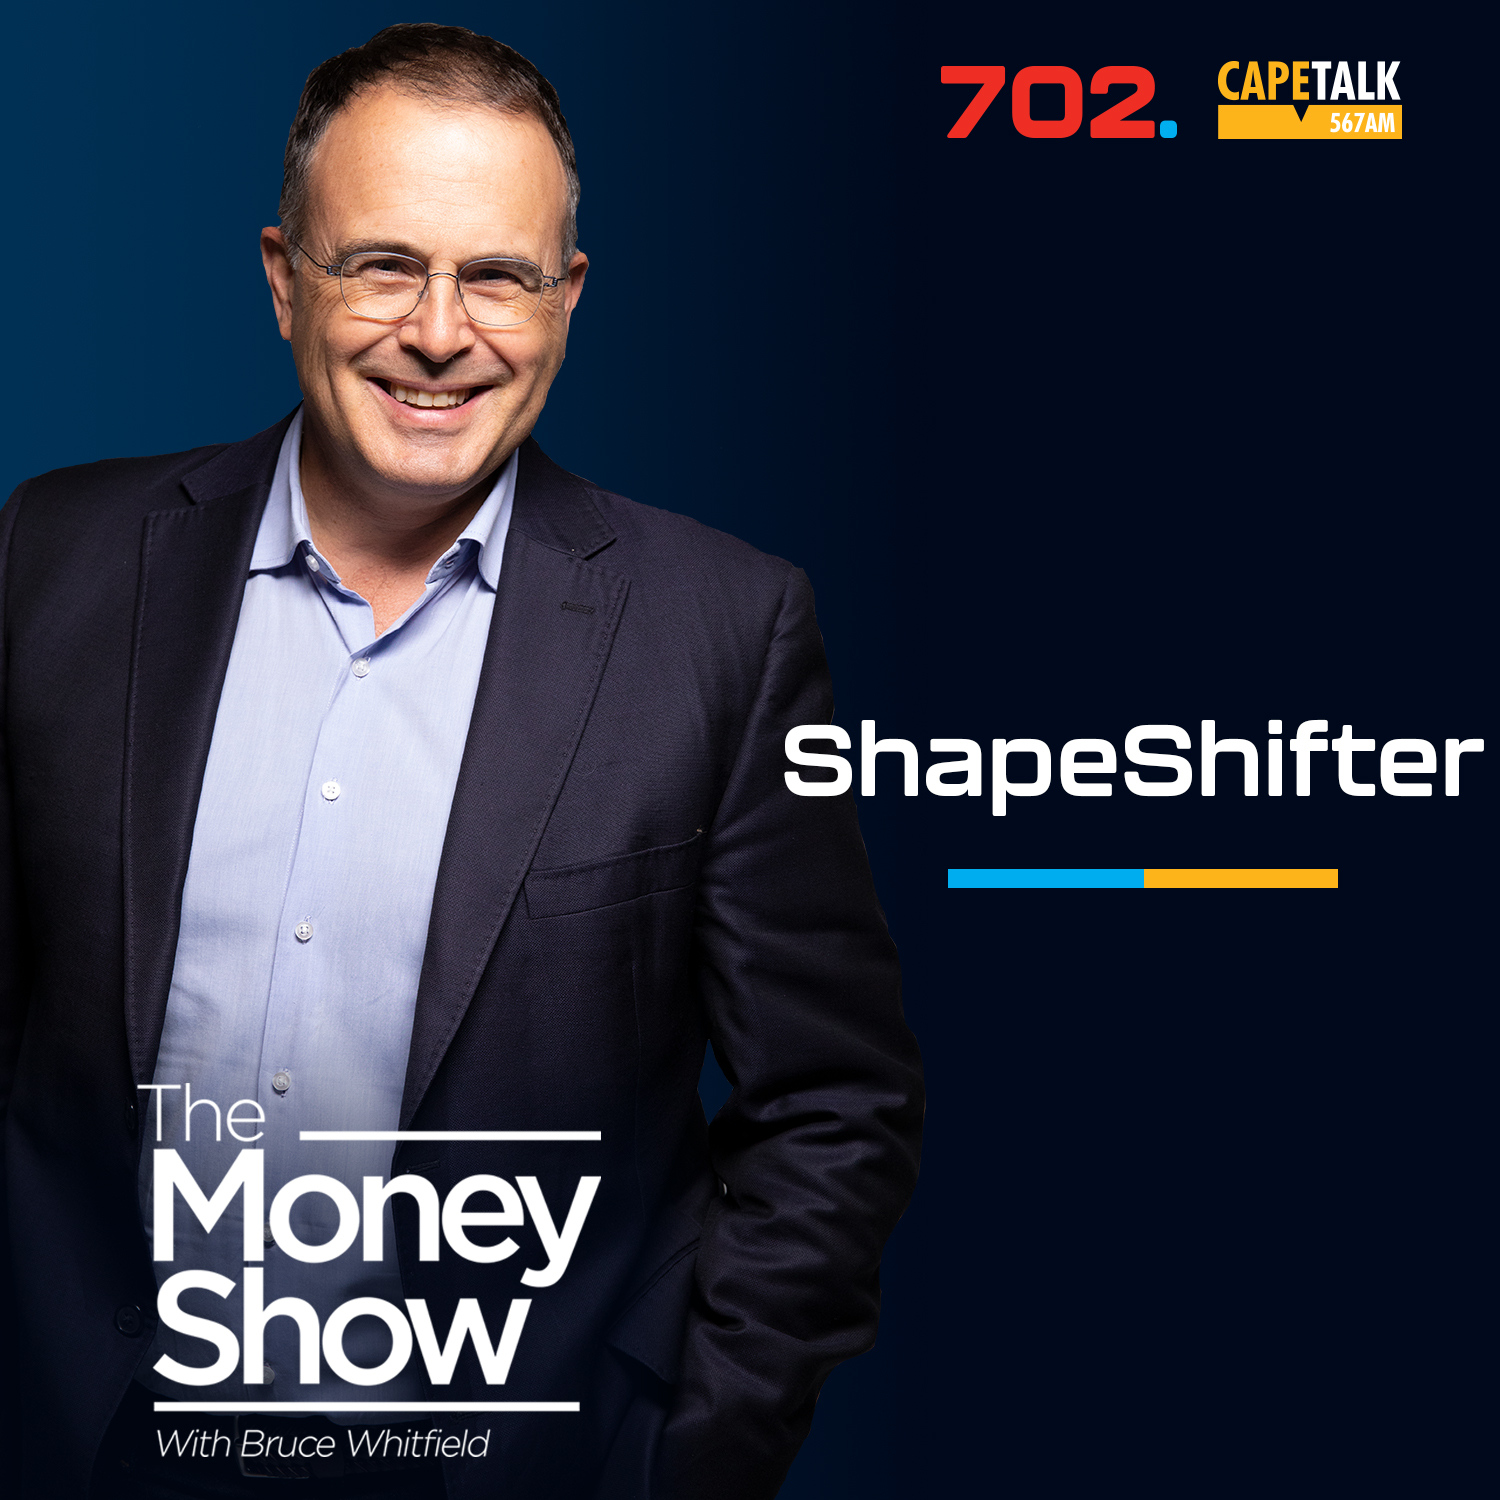 Shapeshifter - Richard Mukheibir co-founder and CEO of Cash Converters SA